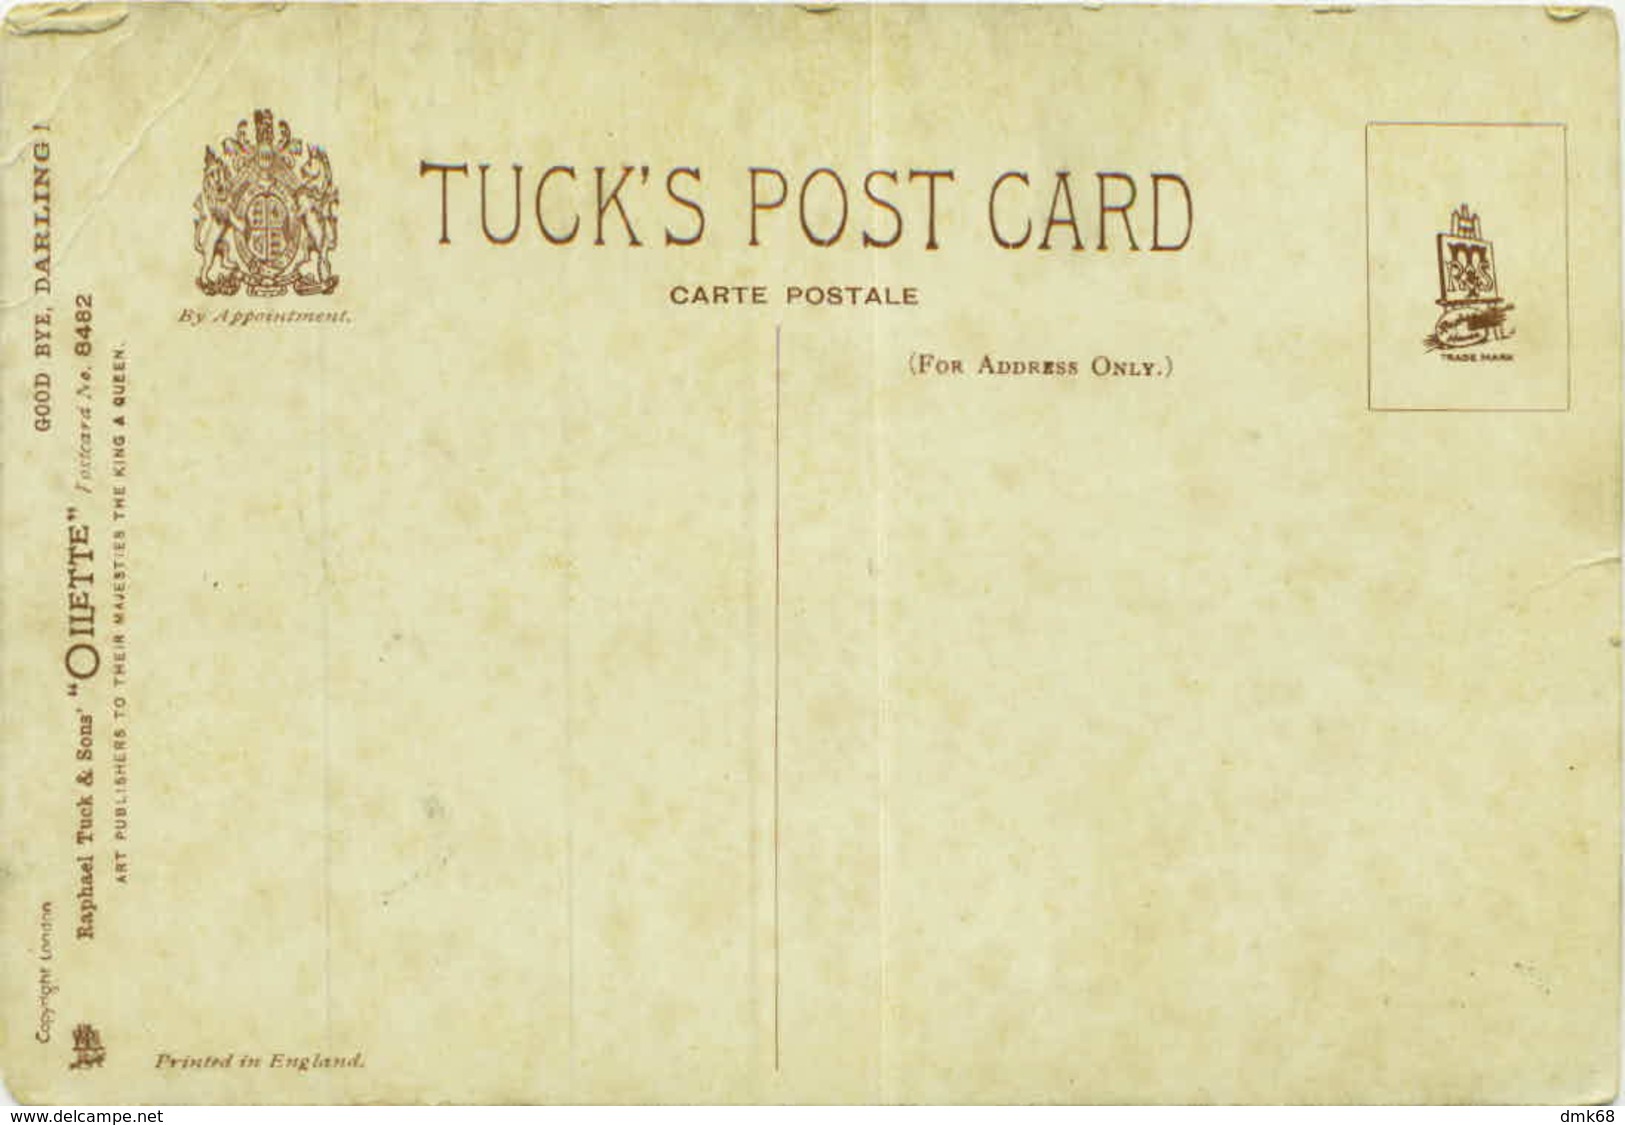 TUCK'S POSTCARD 1910s - GOOD BYE DARLING - SOLDIER & WOMAN KISSING - N. 8482 (BG2161) - Tuck, Raphael